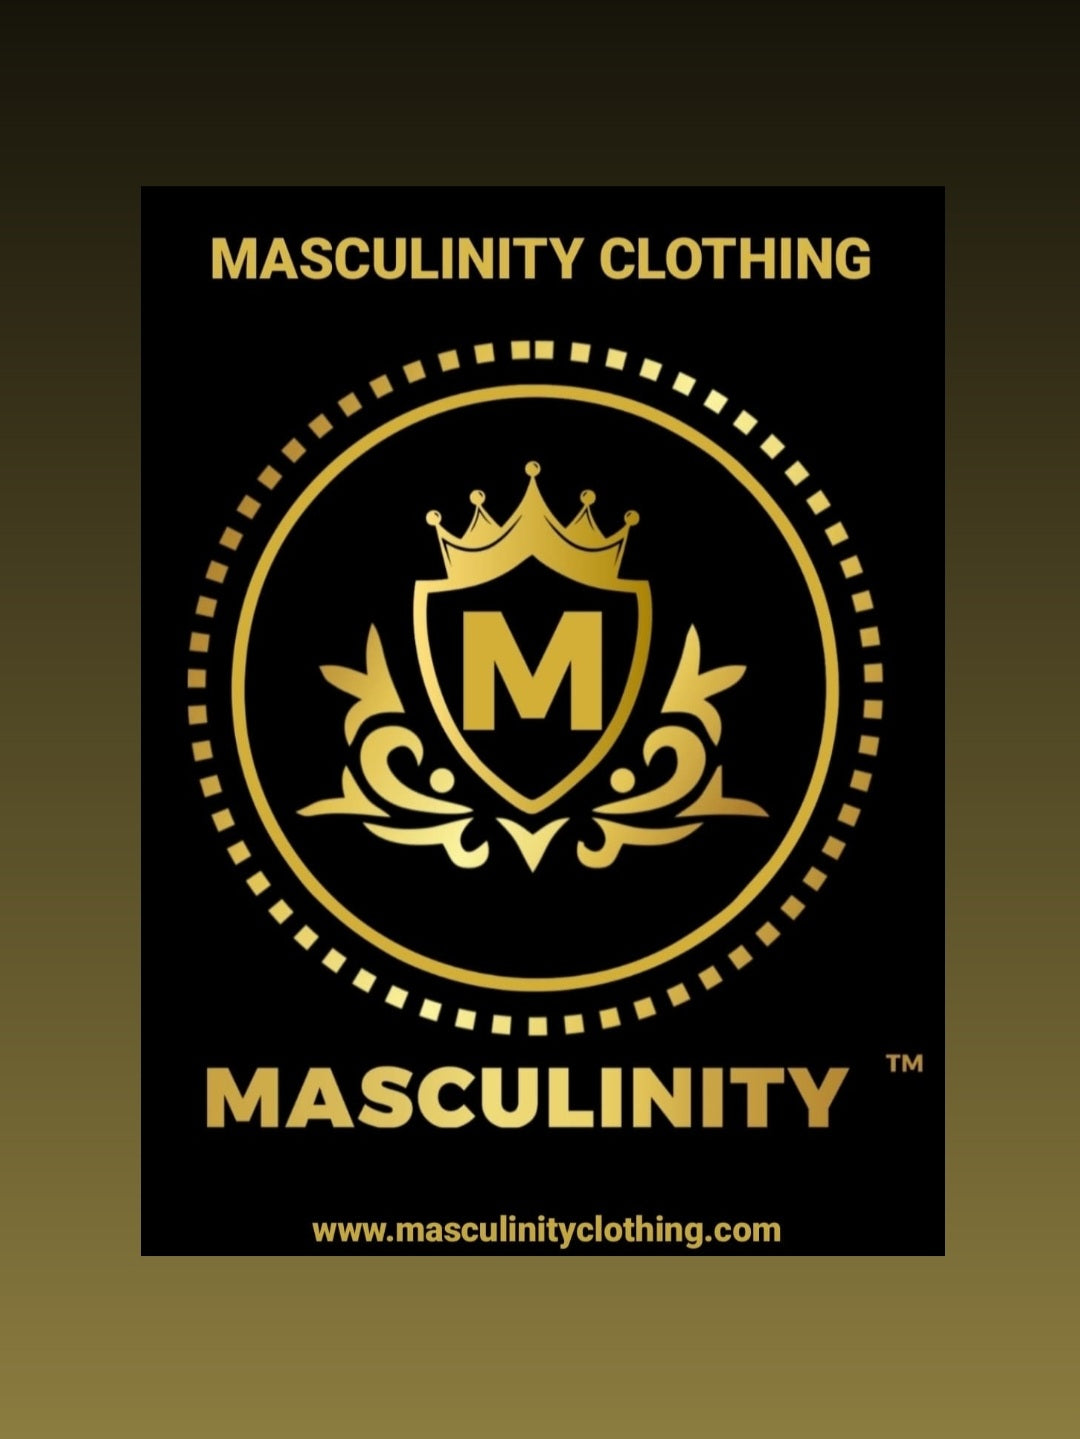 Masculinity Clothing Ad